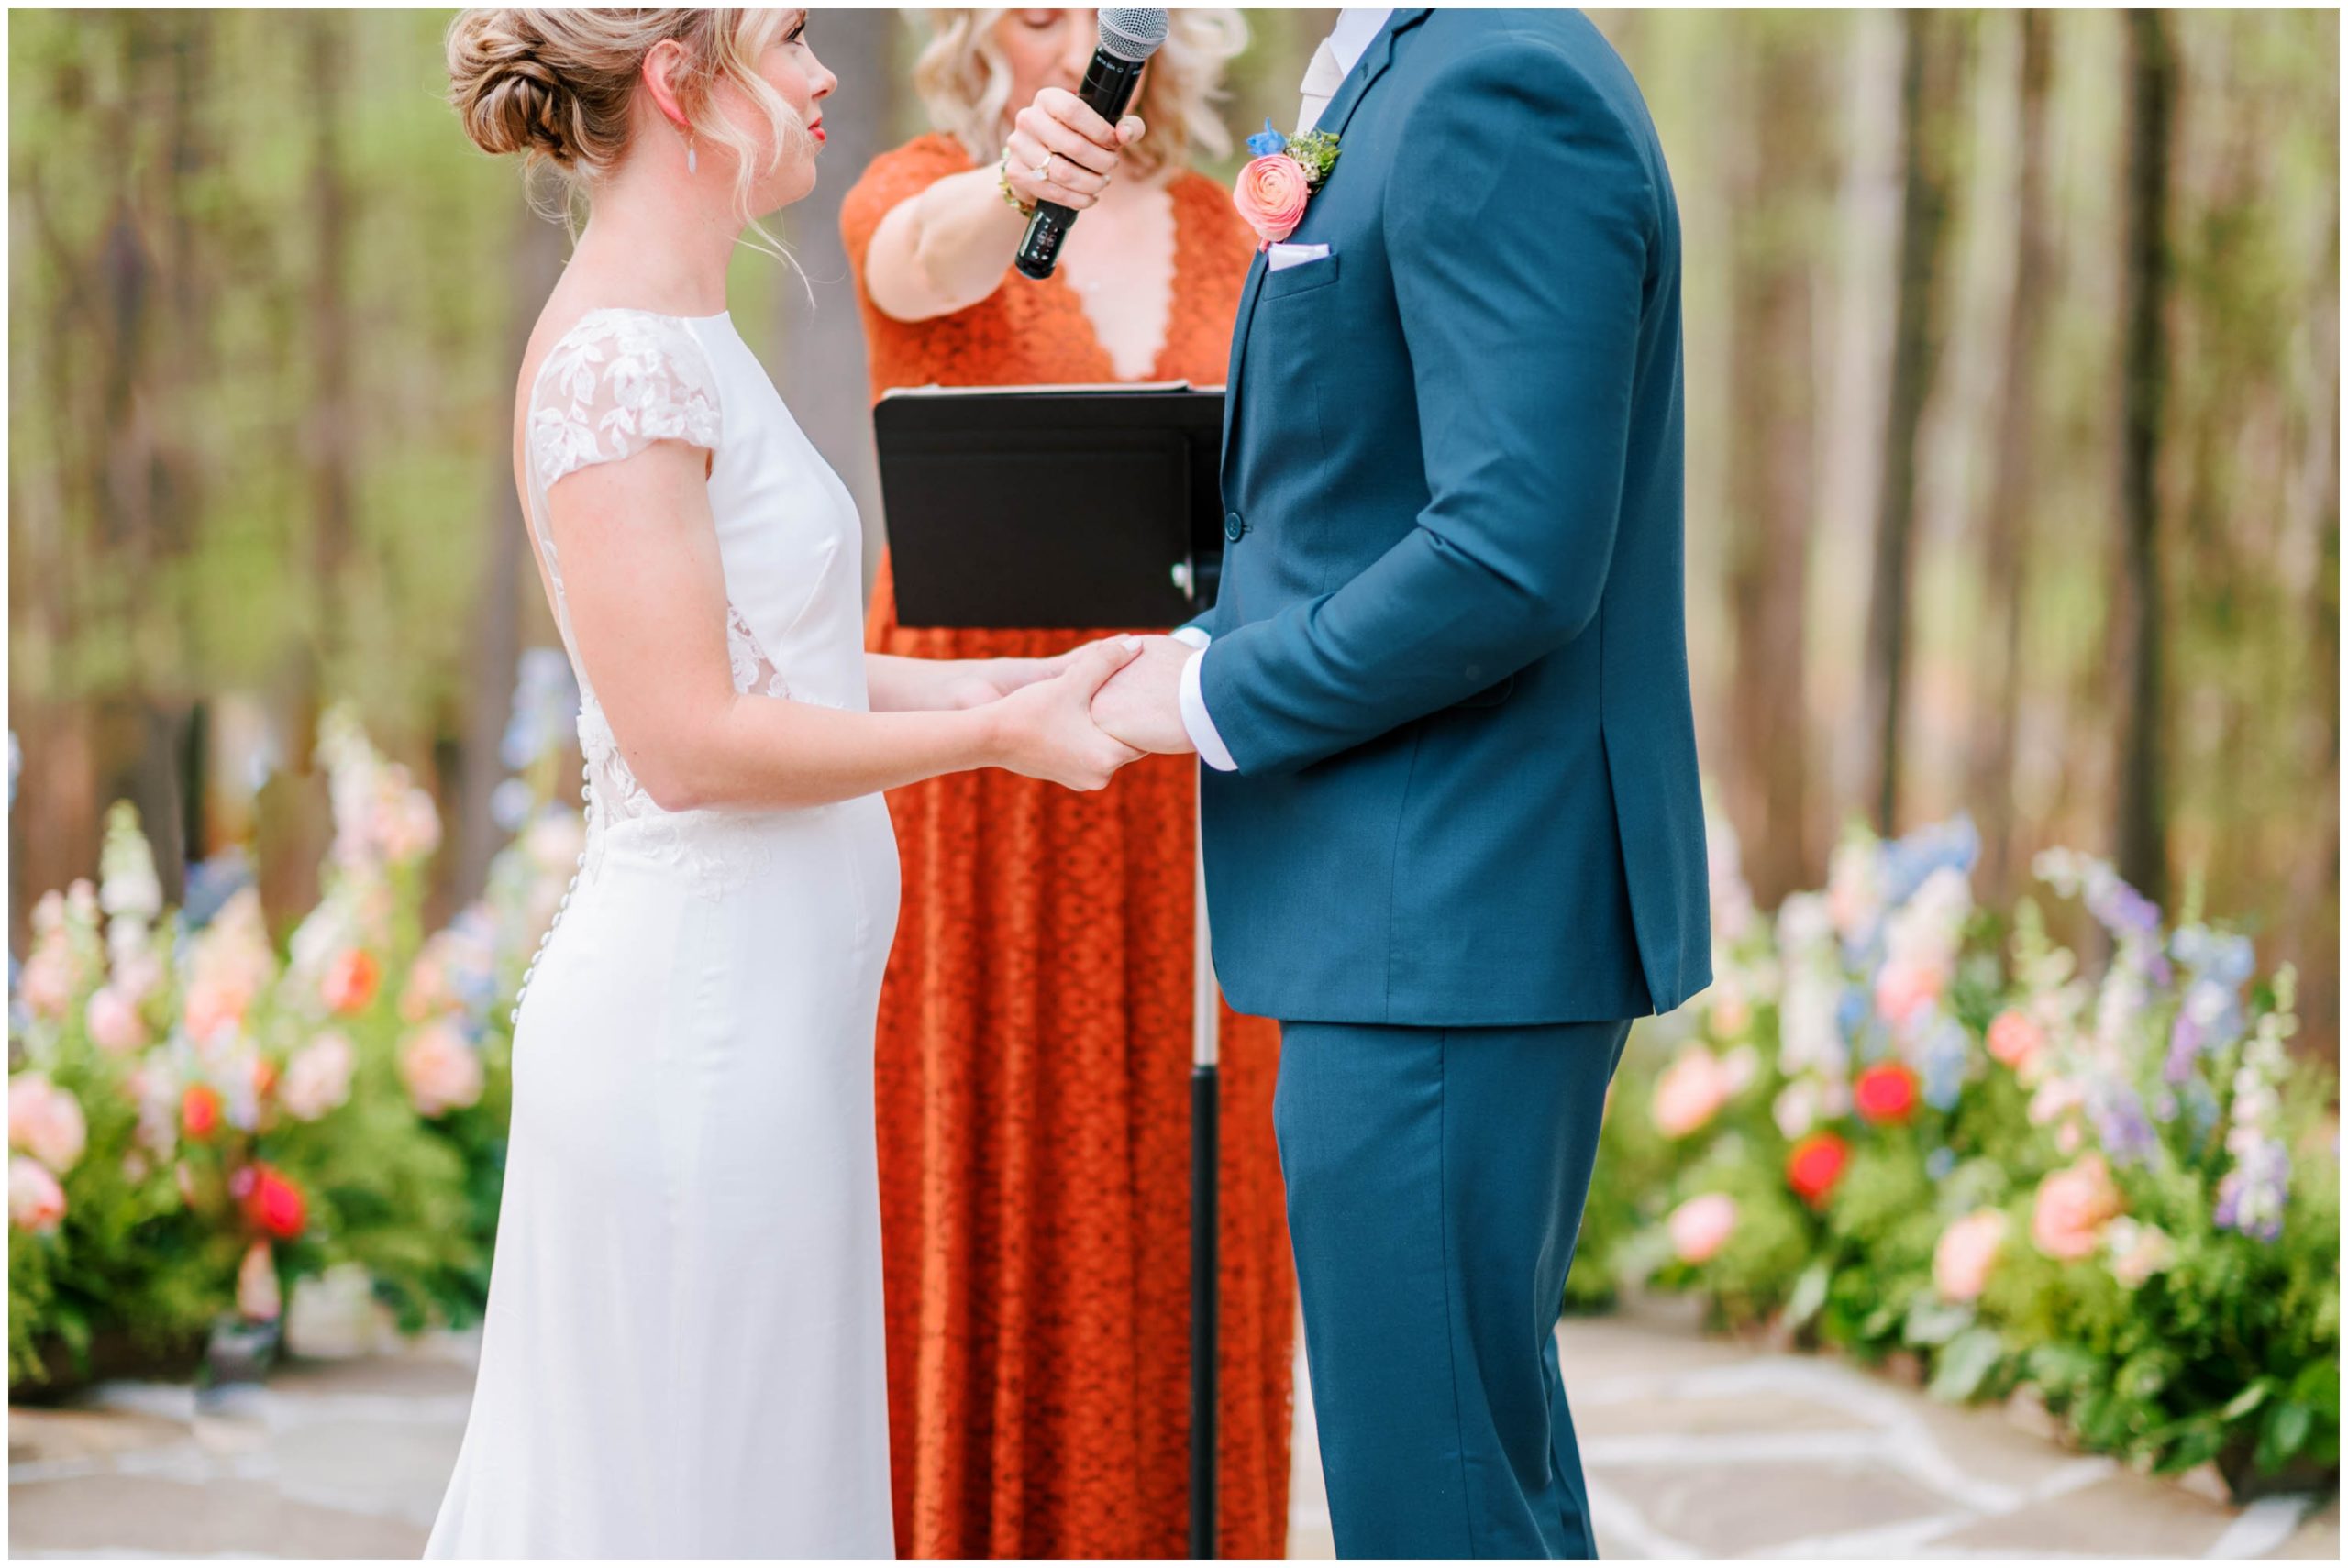 Outdoor wedding ceremony at Carolina Grove